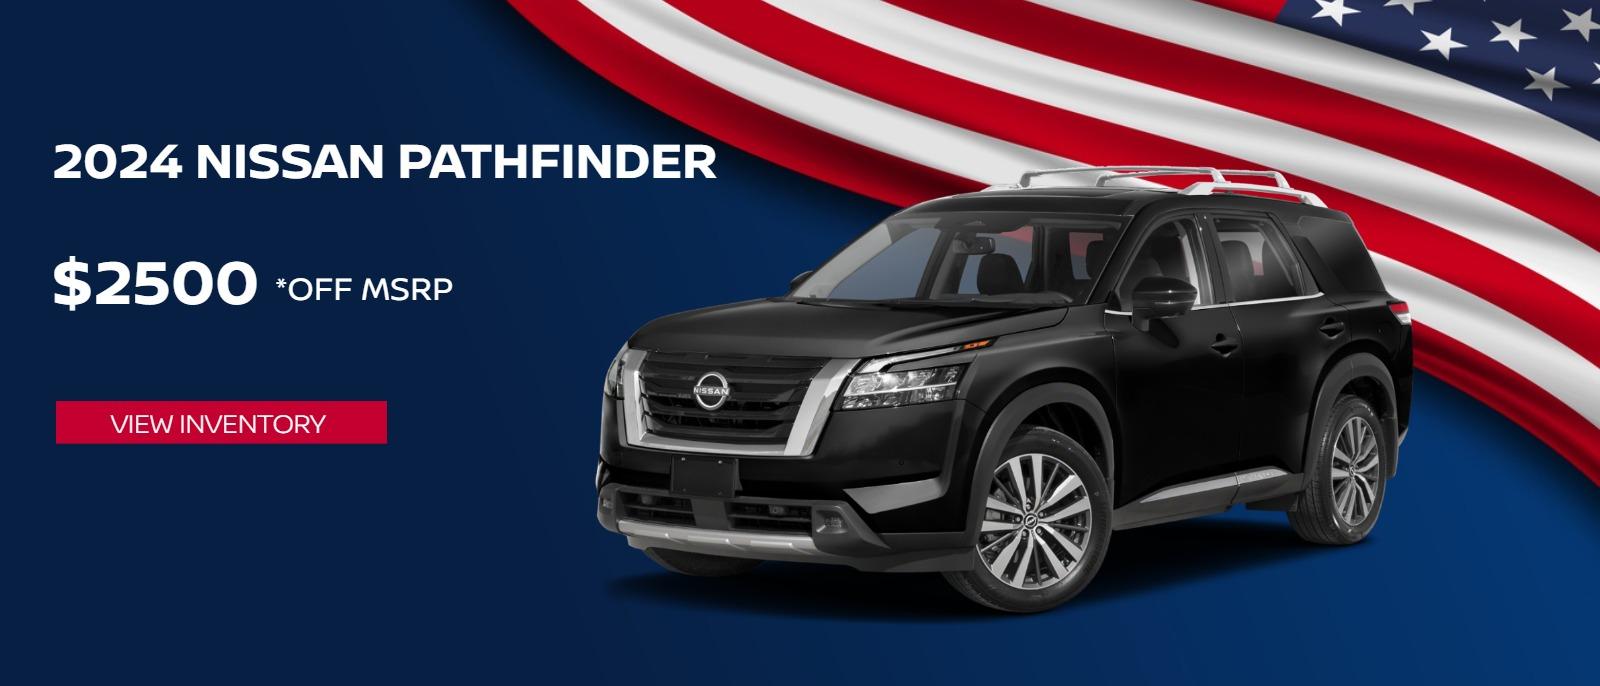 2024 Nissan Pathfinder | patriotic theme